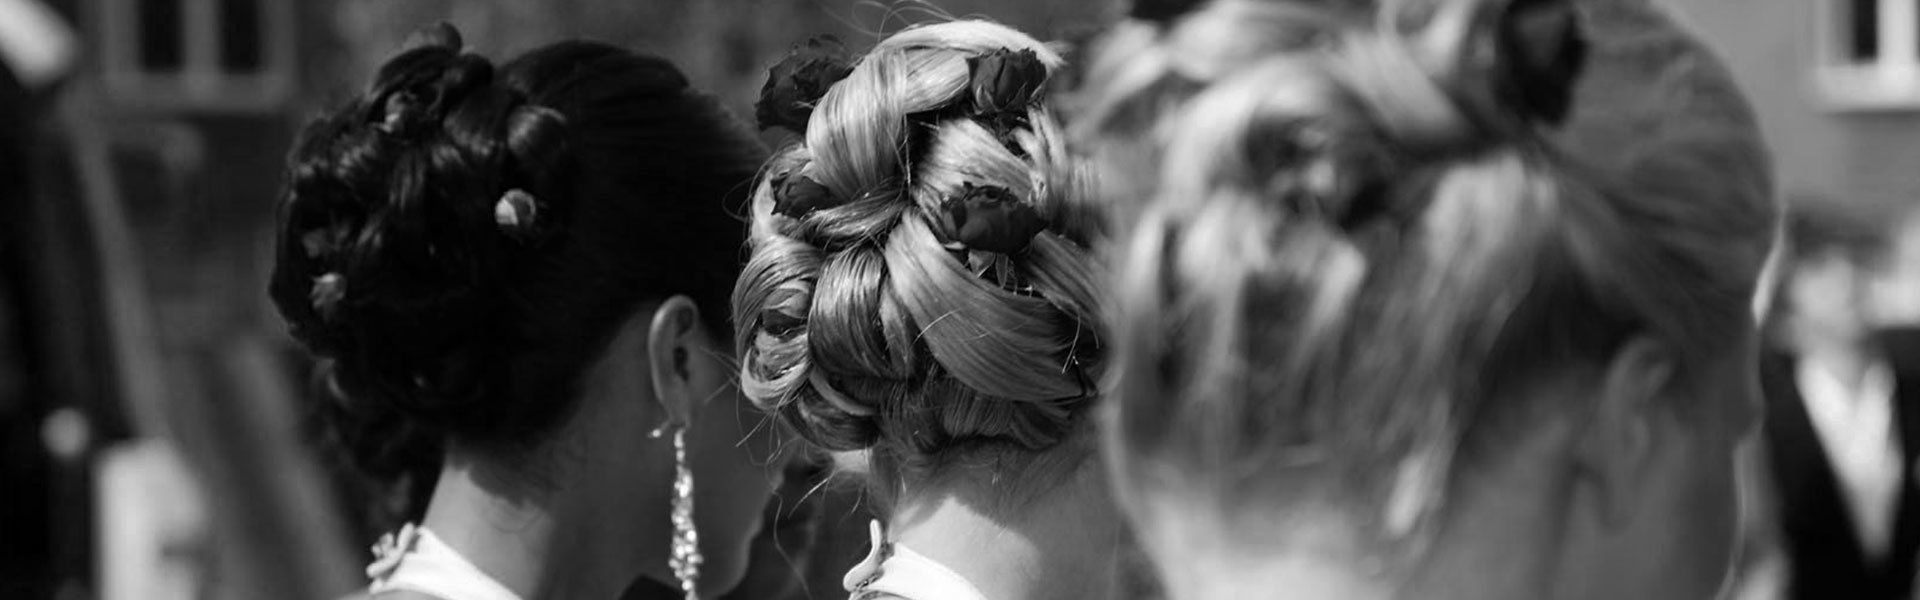 Wedding hairstyles